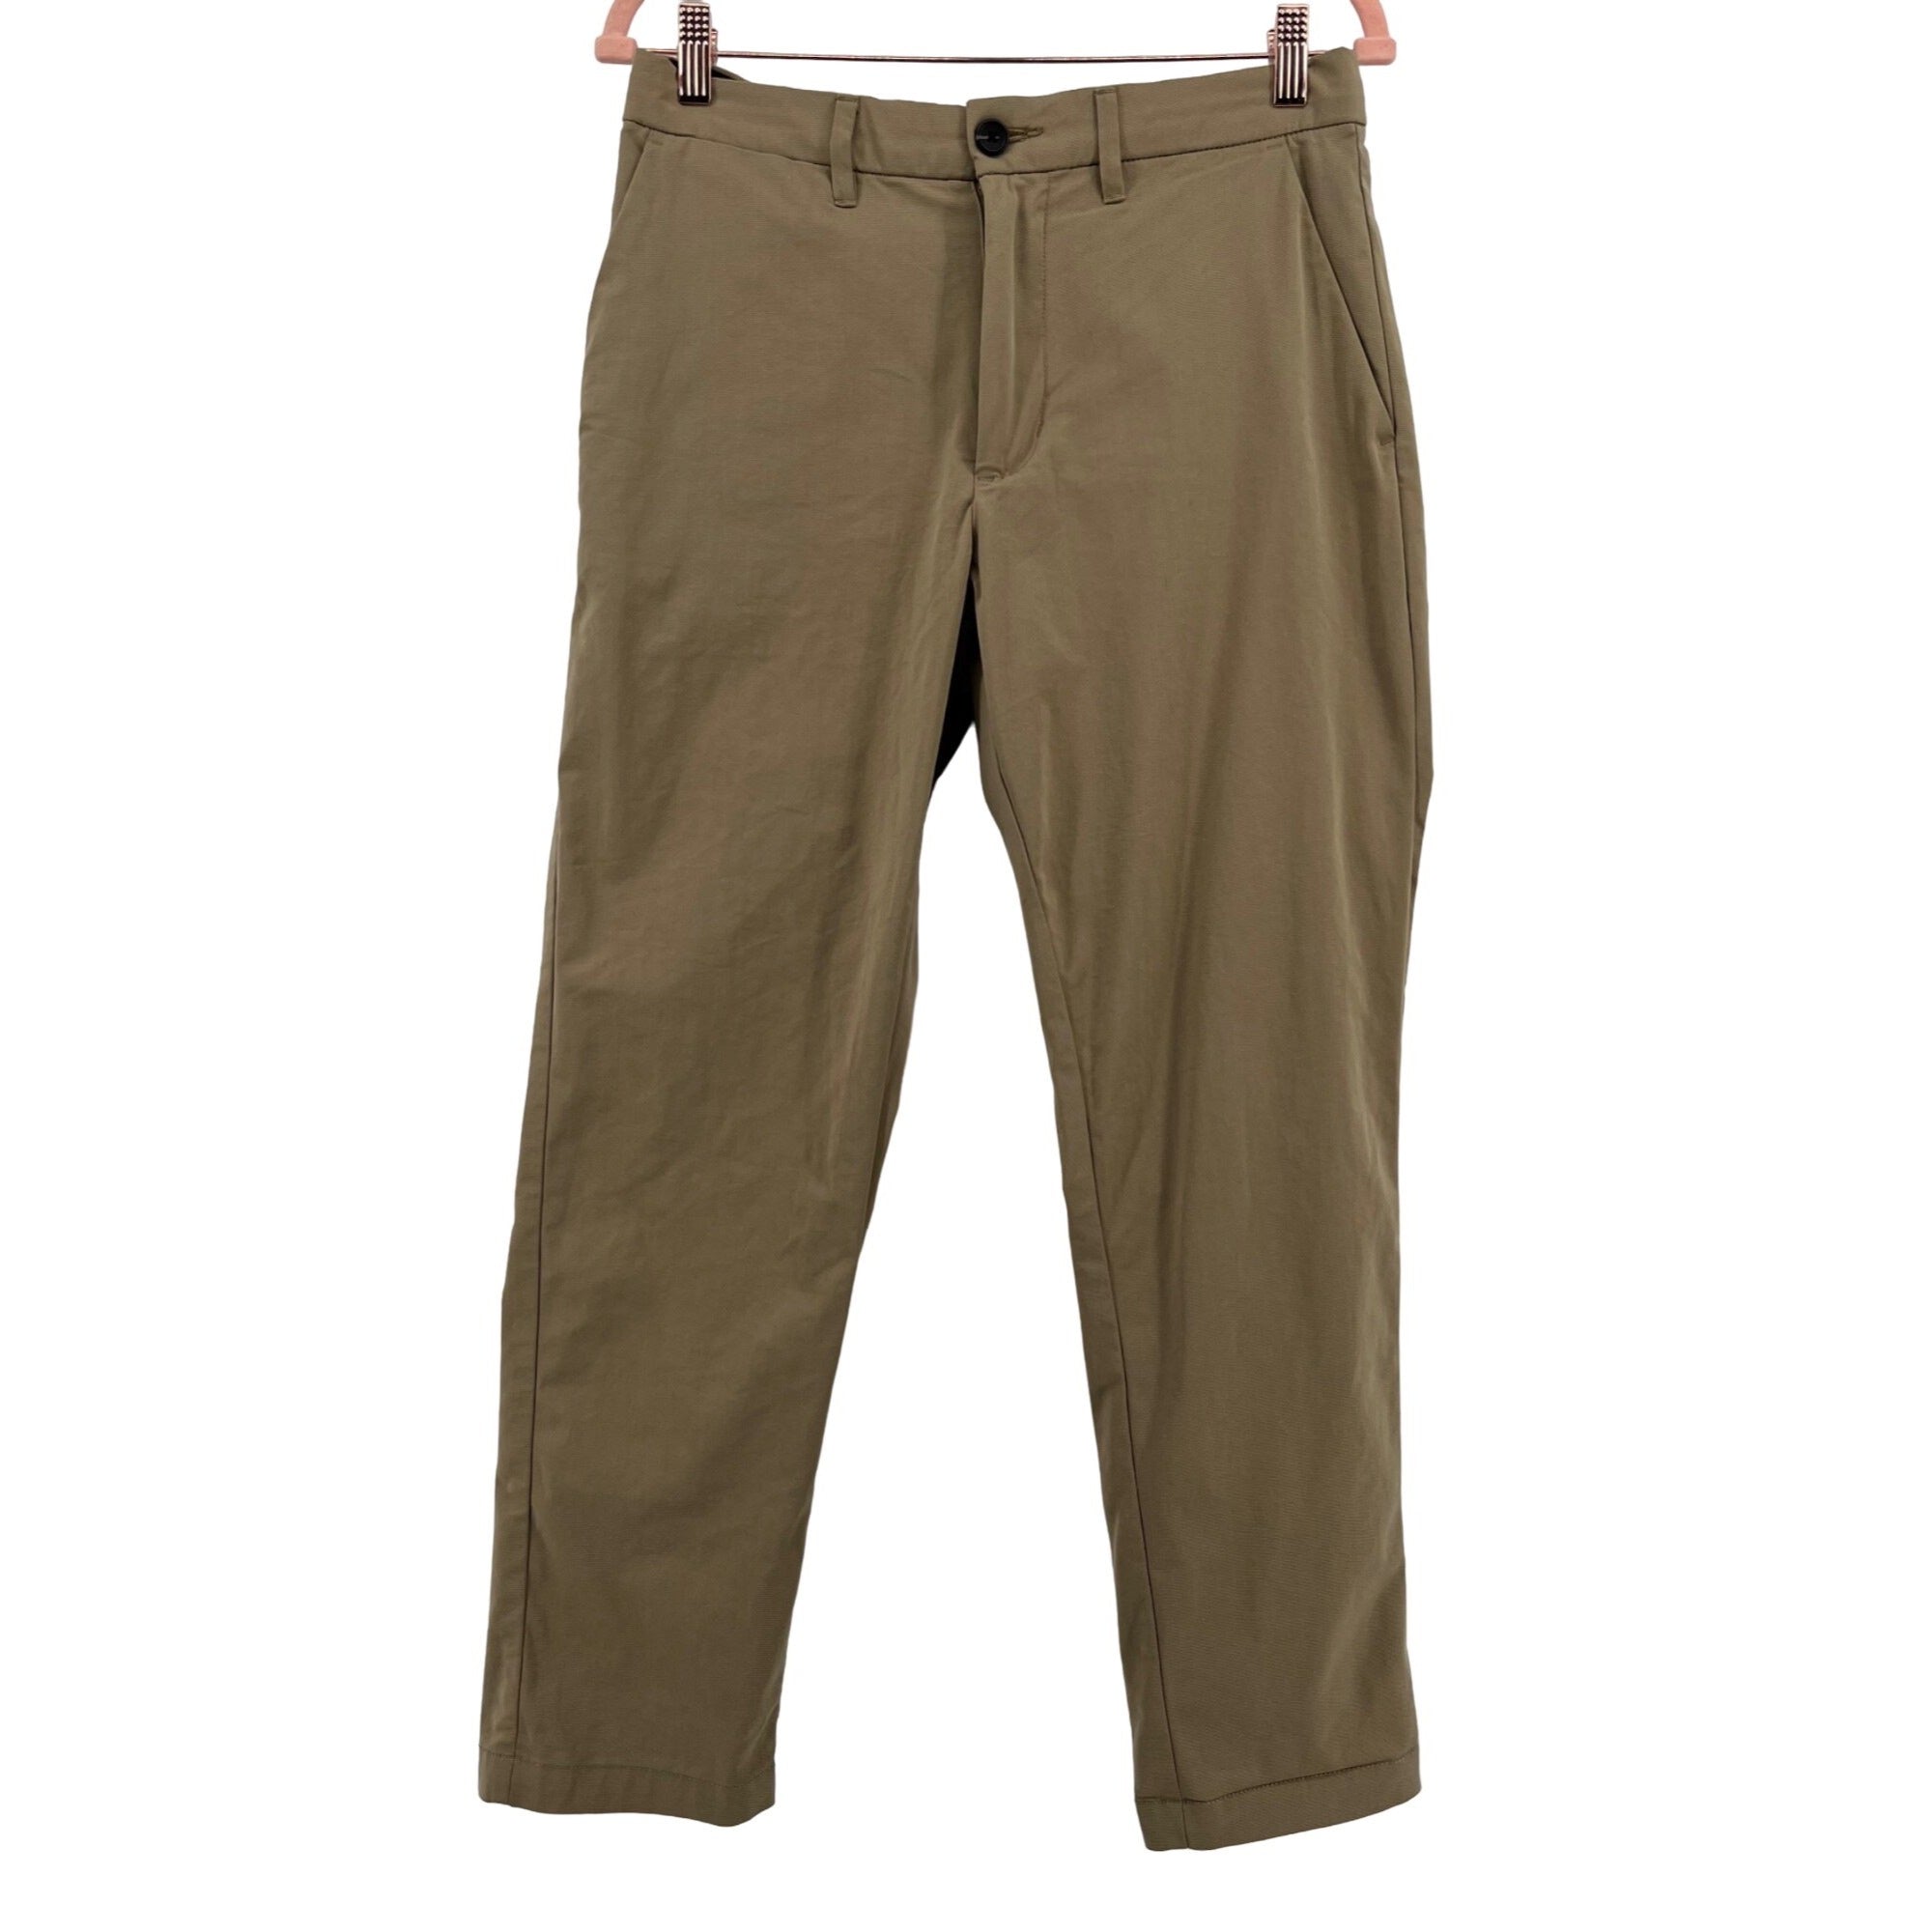 Goodfellow & Co. Men's Size Medium (32W X 30L)Tan Khaki Pants